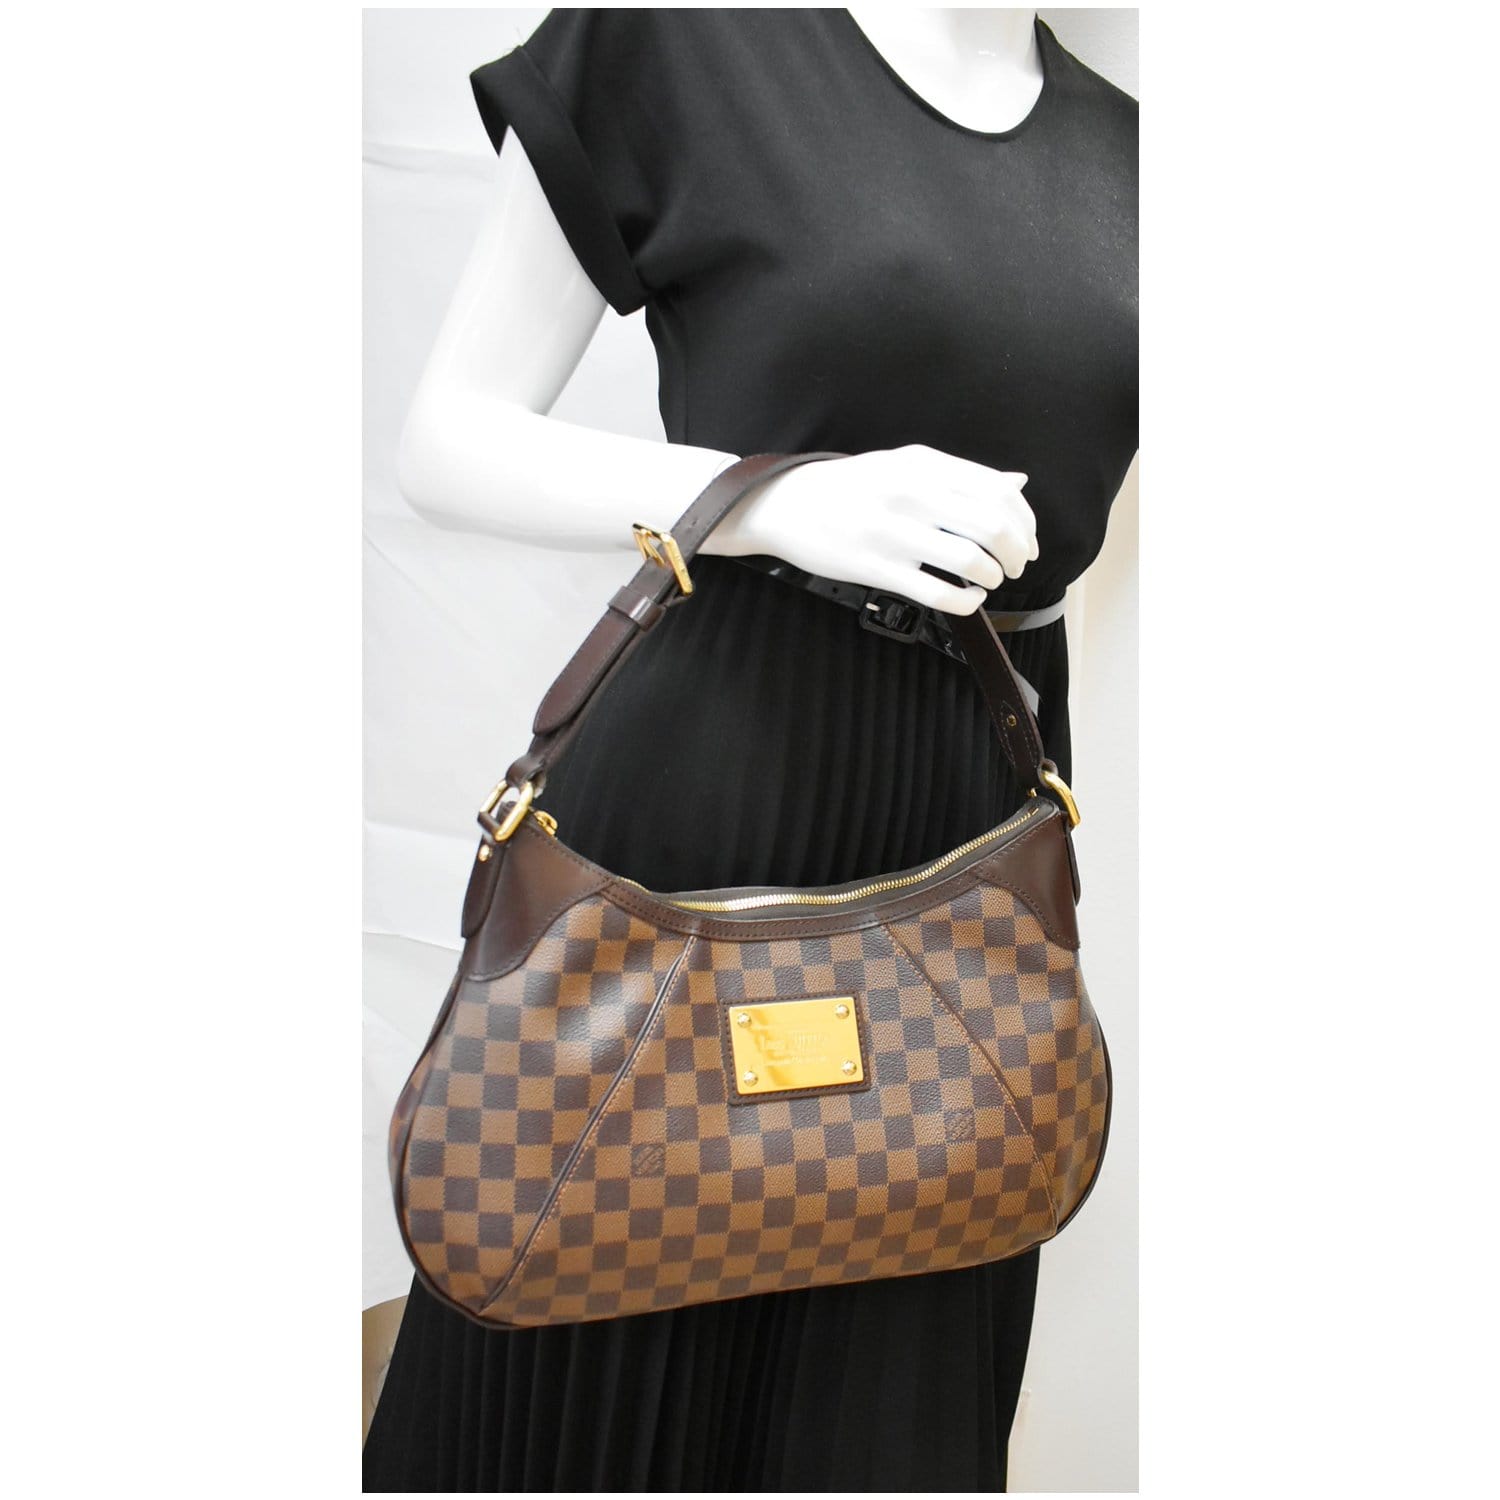 Louis Vuitton Thames GM Handbags, Monogram & Damier Ebene, Reveal, Review, What fits